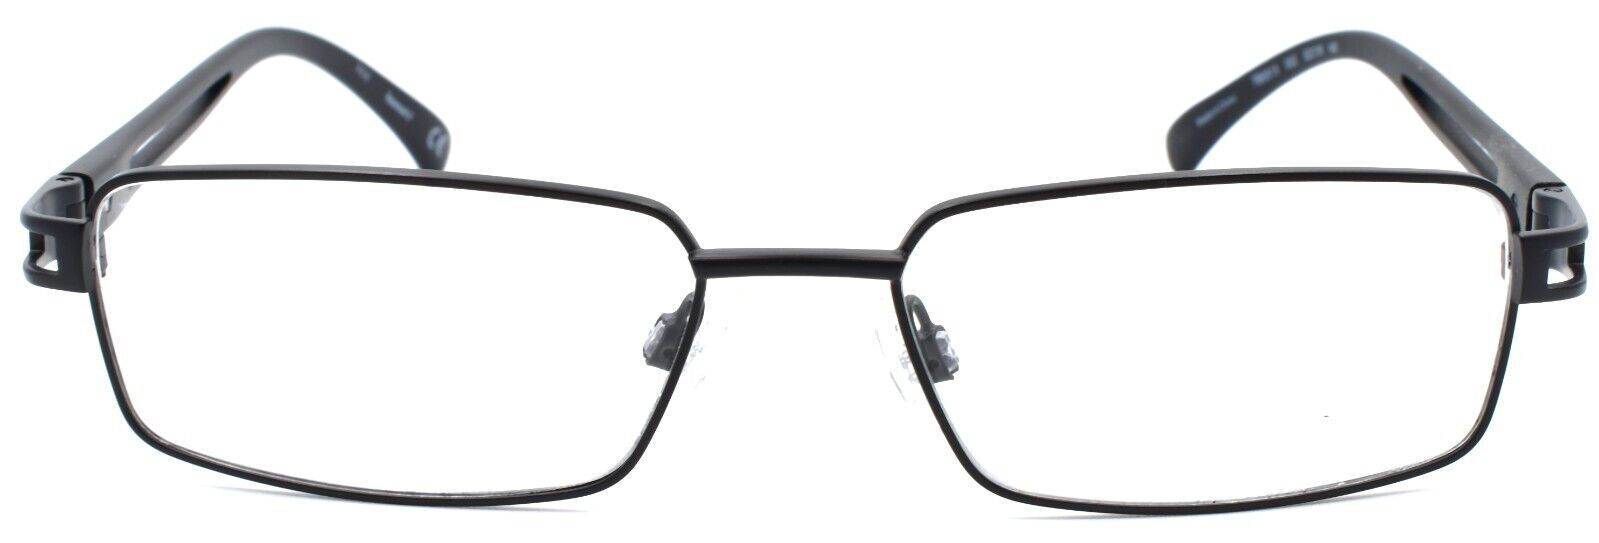 2-TIMBERLAND TB0513 002 Men's Eyeglasses Frames 52-16-140 Matte Black-726773164014-IKSpecs